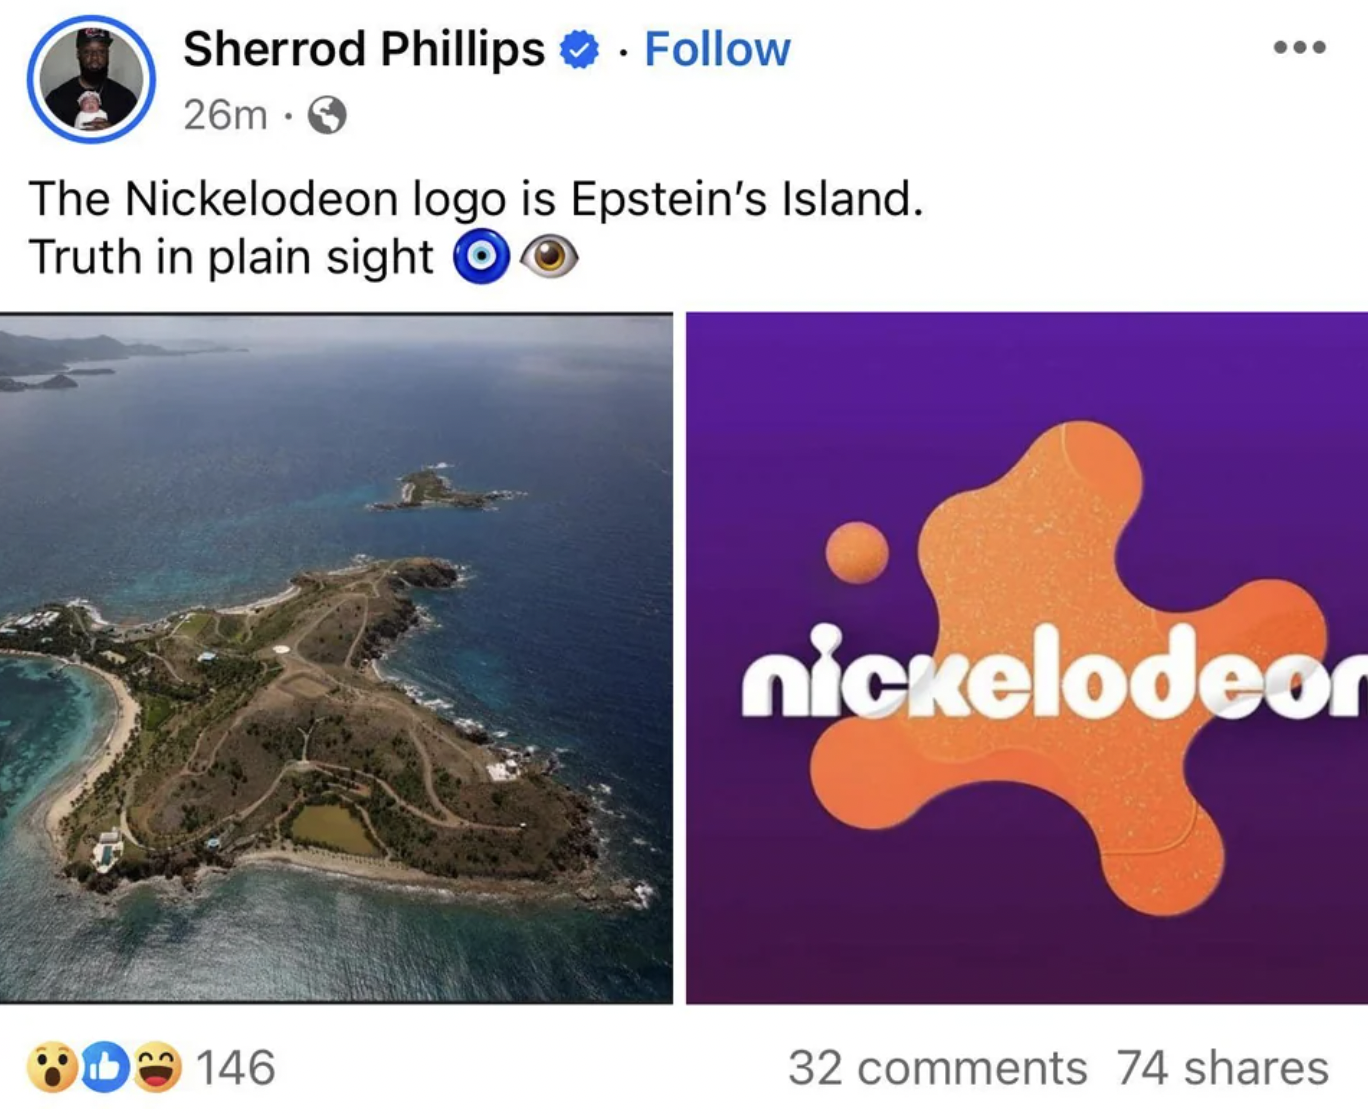 cay - Sherrod Phillips. 26m. The Nickelodeon logo is Epstein's Island. Truth in plain sight O nickelodeon 146 32 74